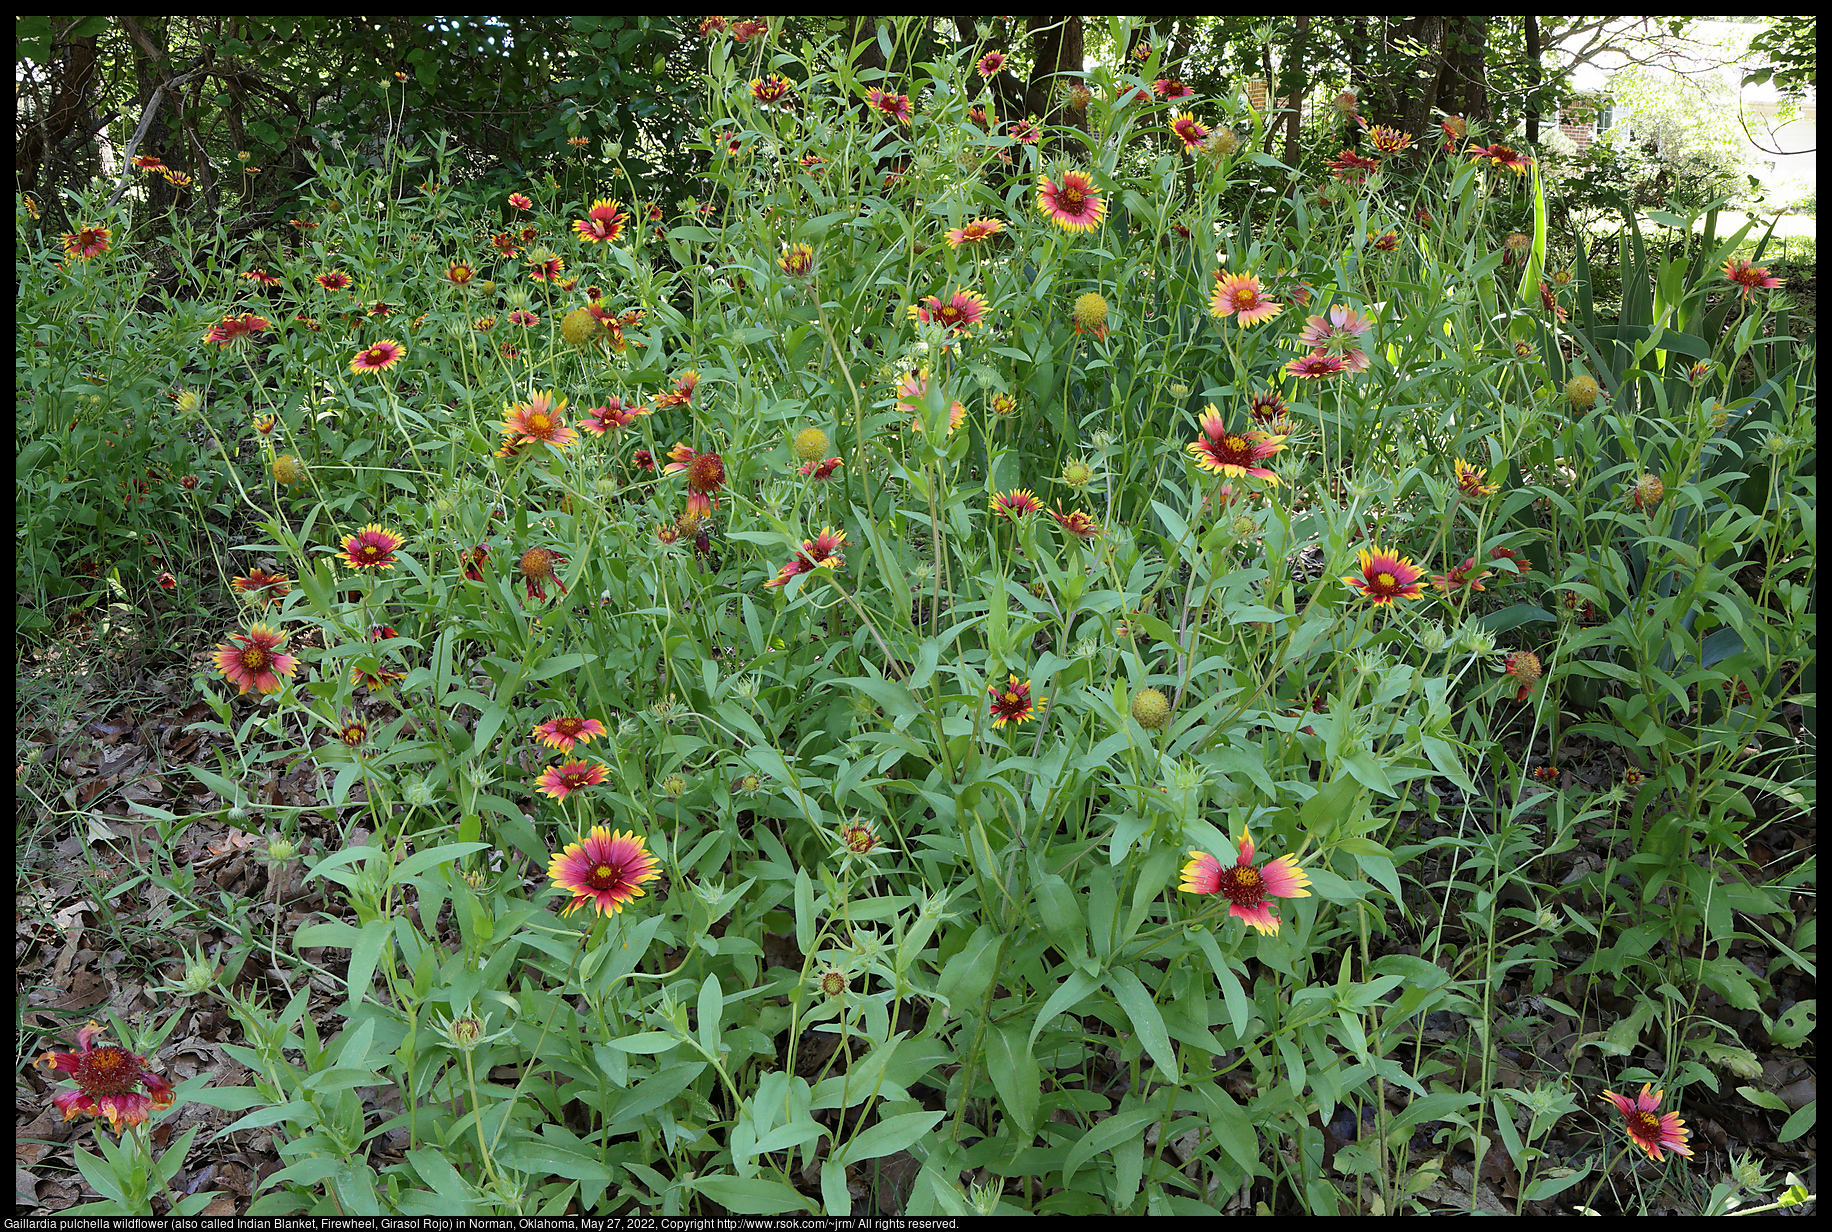 2022may27_gaillardia_IMG_9078-Gaillardia pulchella wildflower (also called Indian Blanket, Firewheel, Girasol Rojo) in Norman, Oklahoma, May 27, 2022